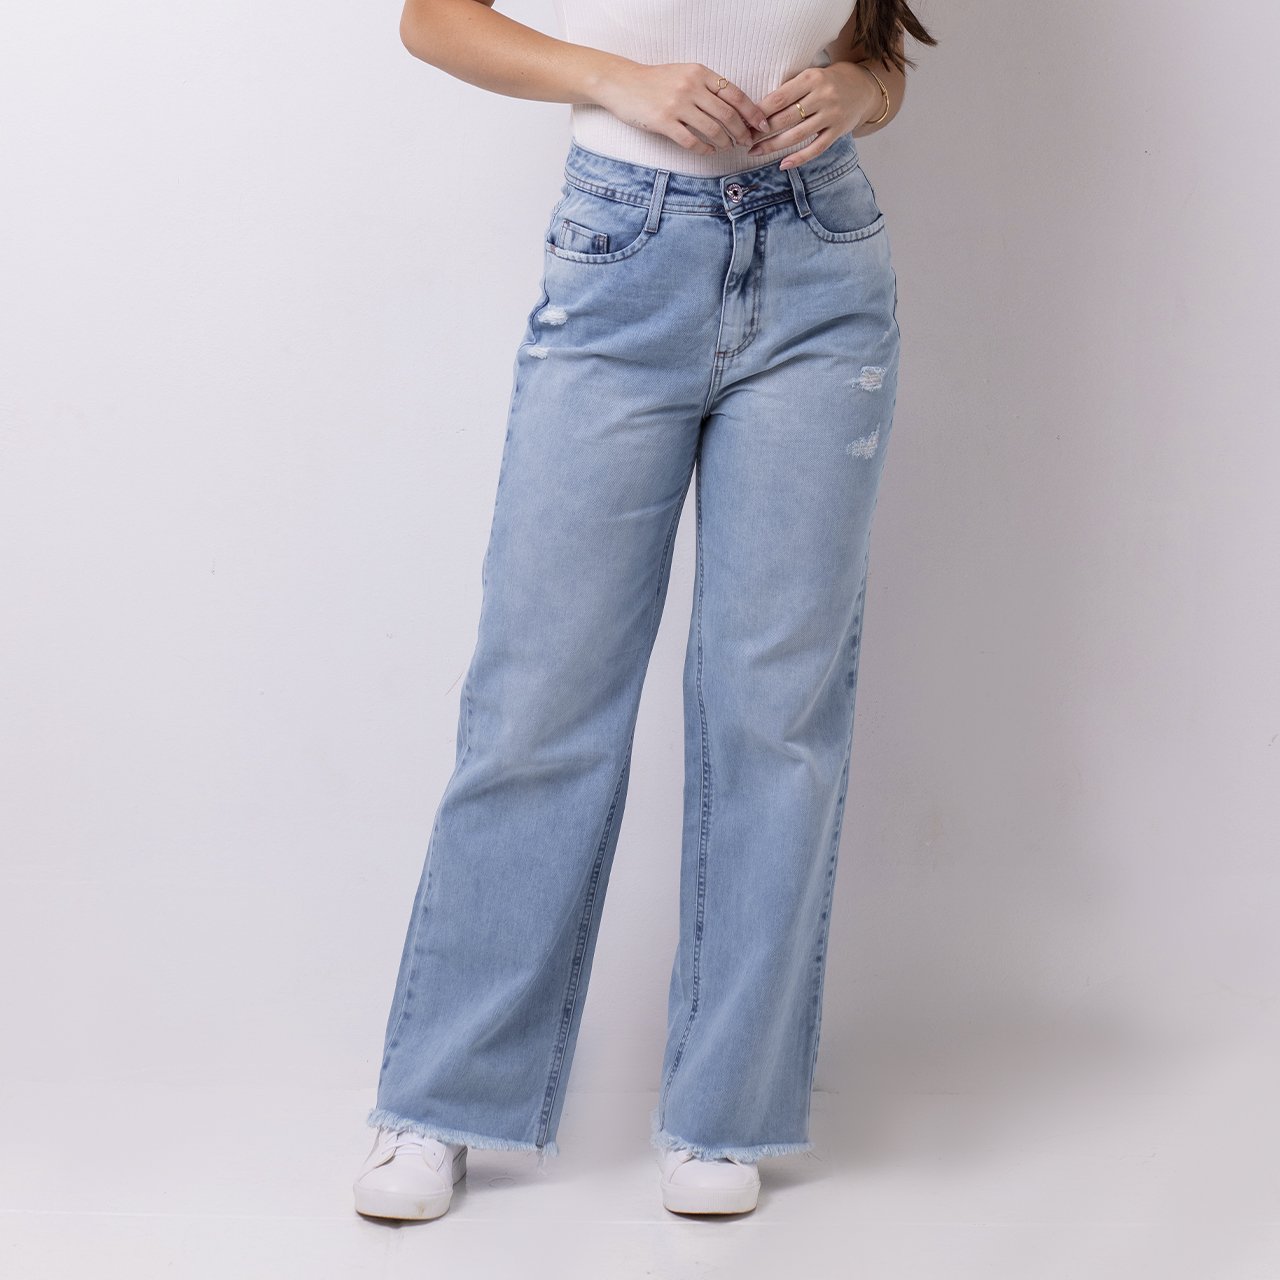 calca-jeans-mom-voox-feminina-vx10248-c